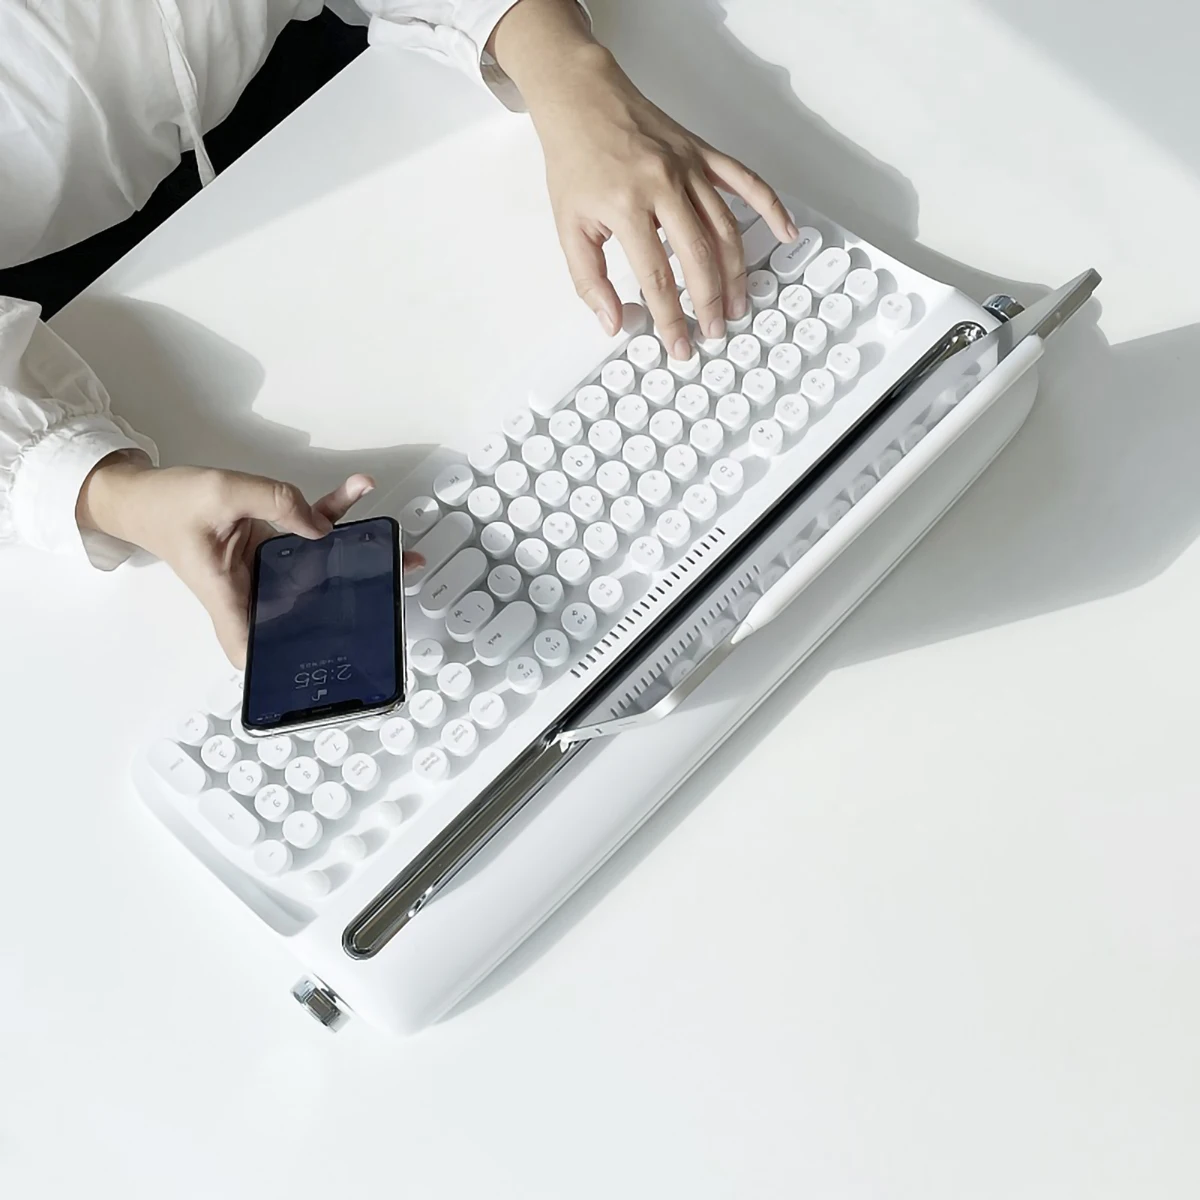 Внешняя клавиатура в стиле ретро для планшета iPad Apple Huawei |